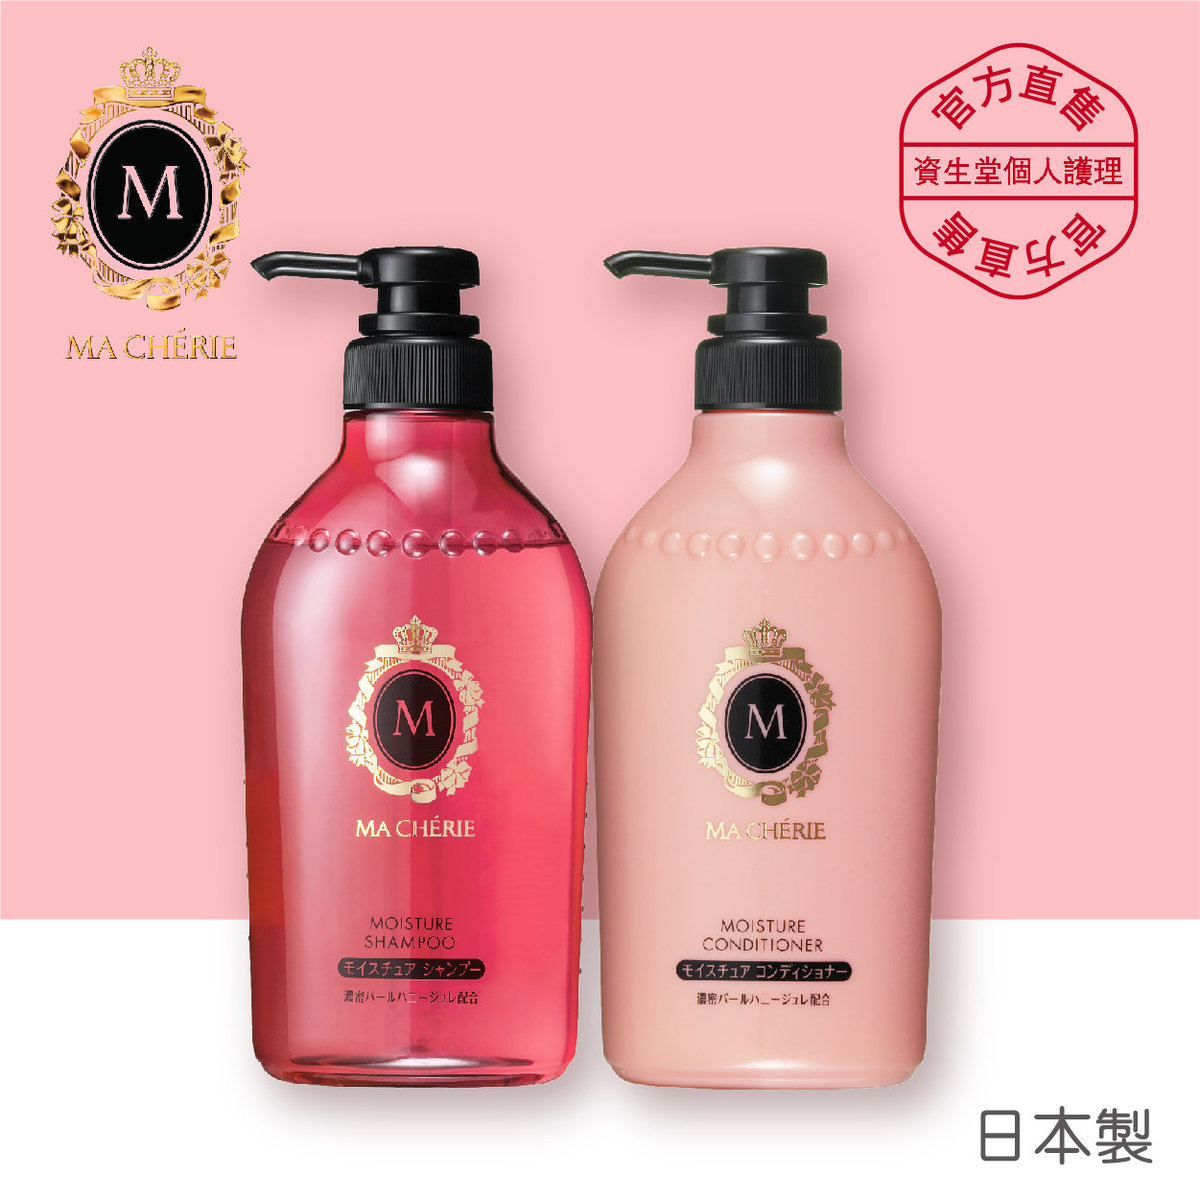 Ma Cherie Moisture Shampoo 450ml Conditioner 450ml Hktvmall The Largest Hk Shopping Platform